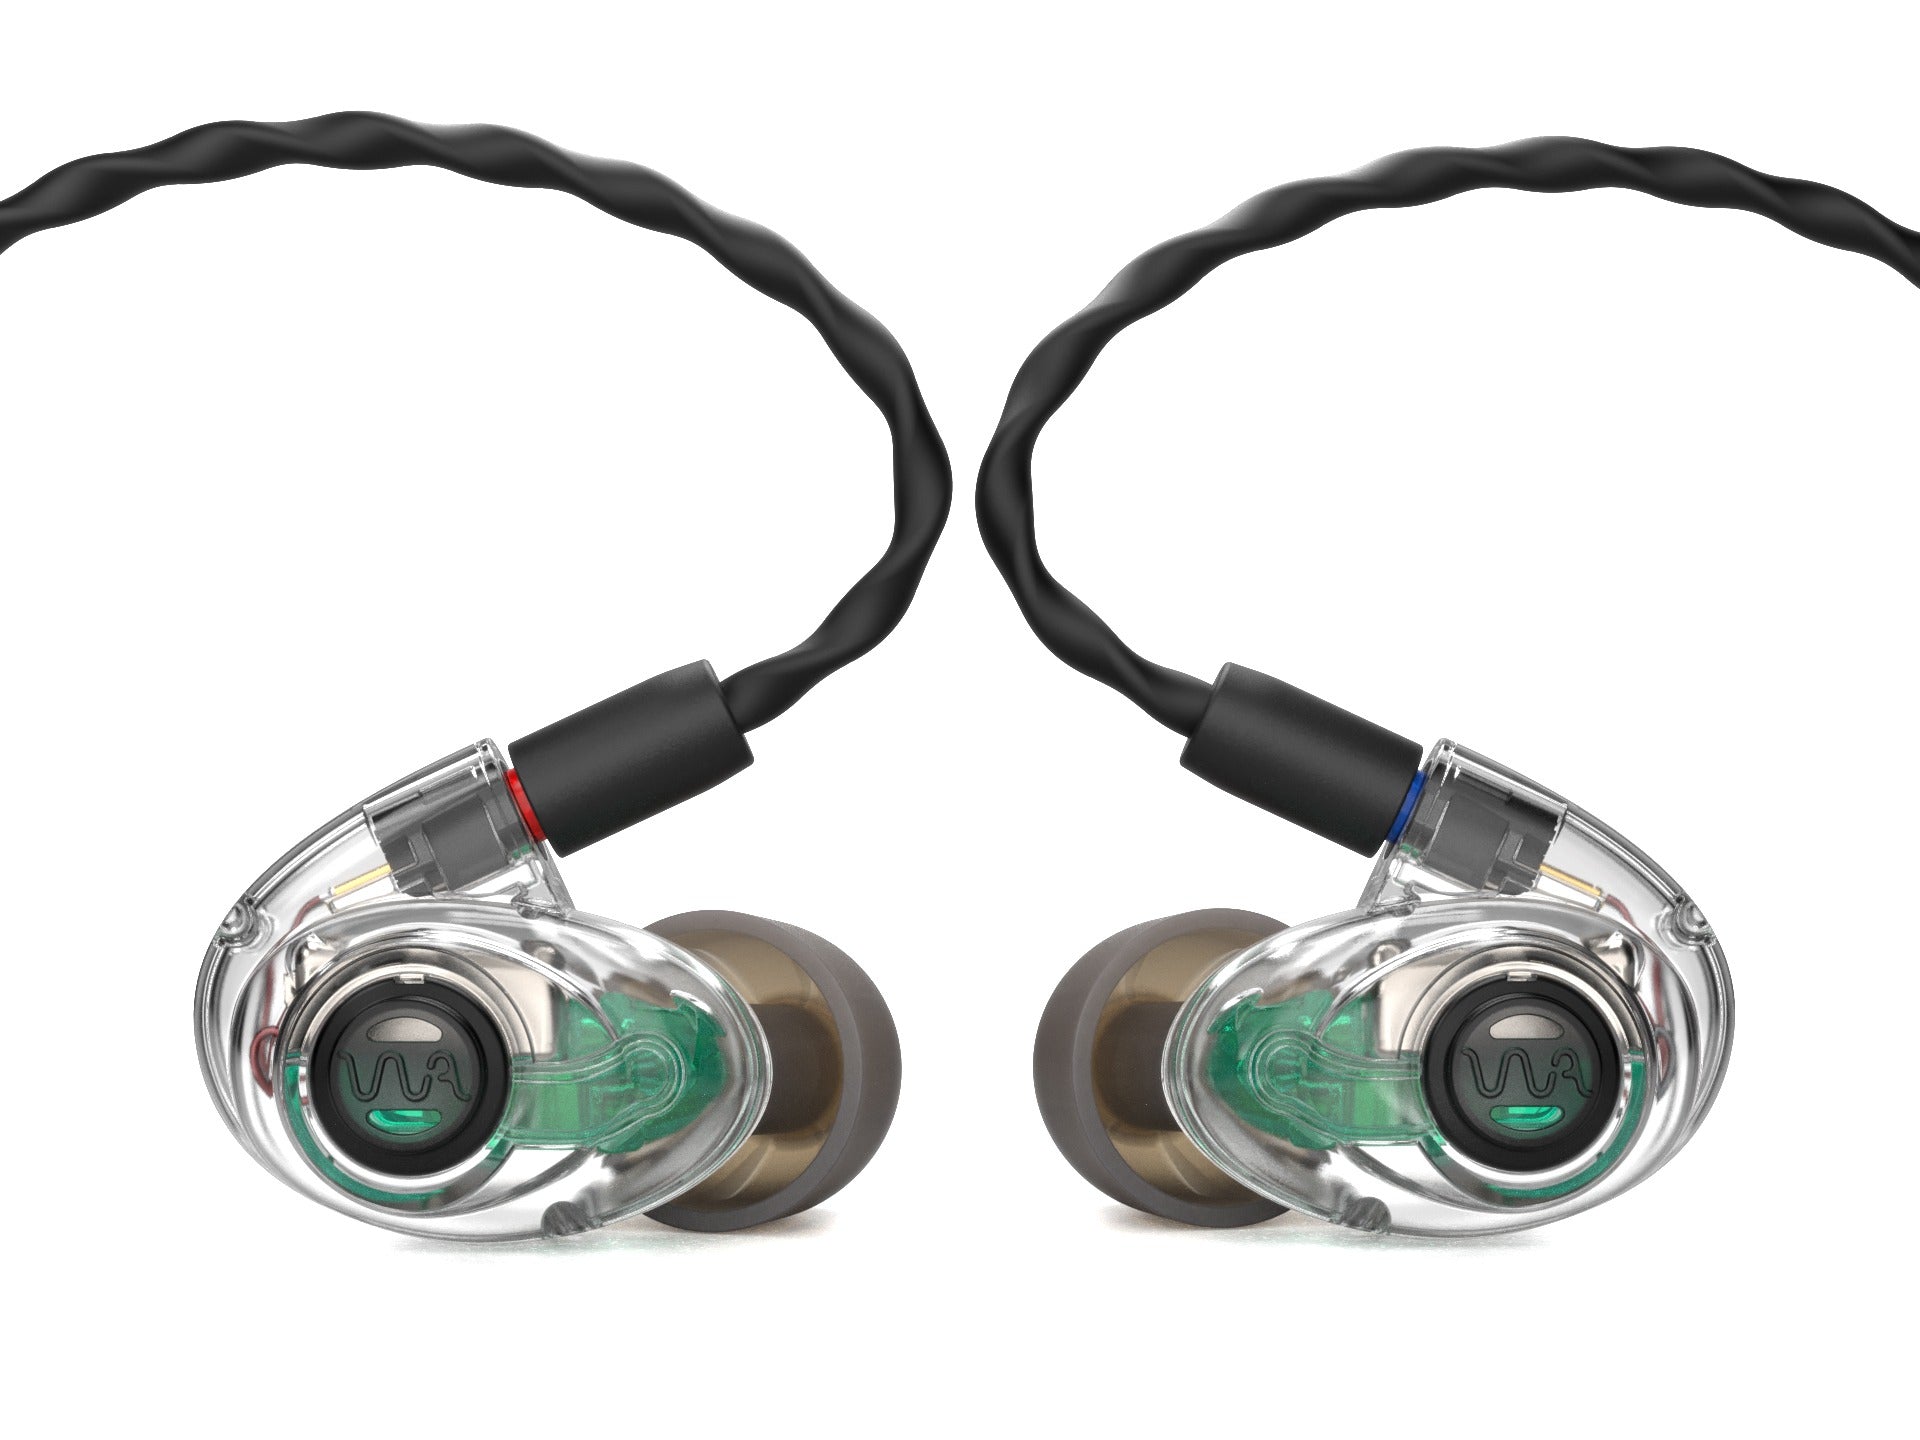 Westone Audio Am Pro X30 3-Driver Universal In-Ear Monitors